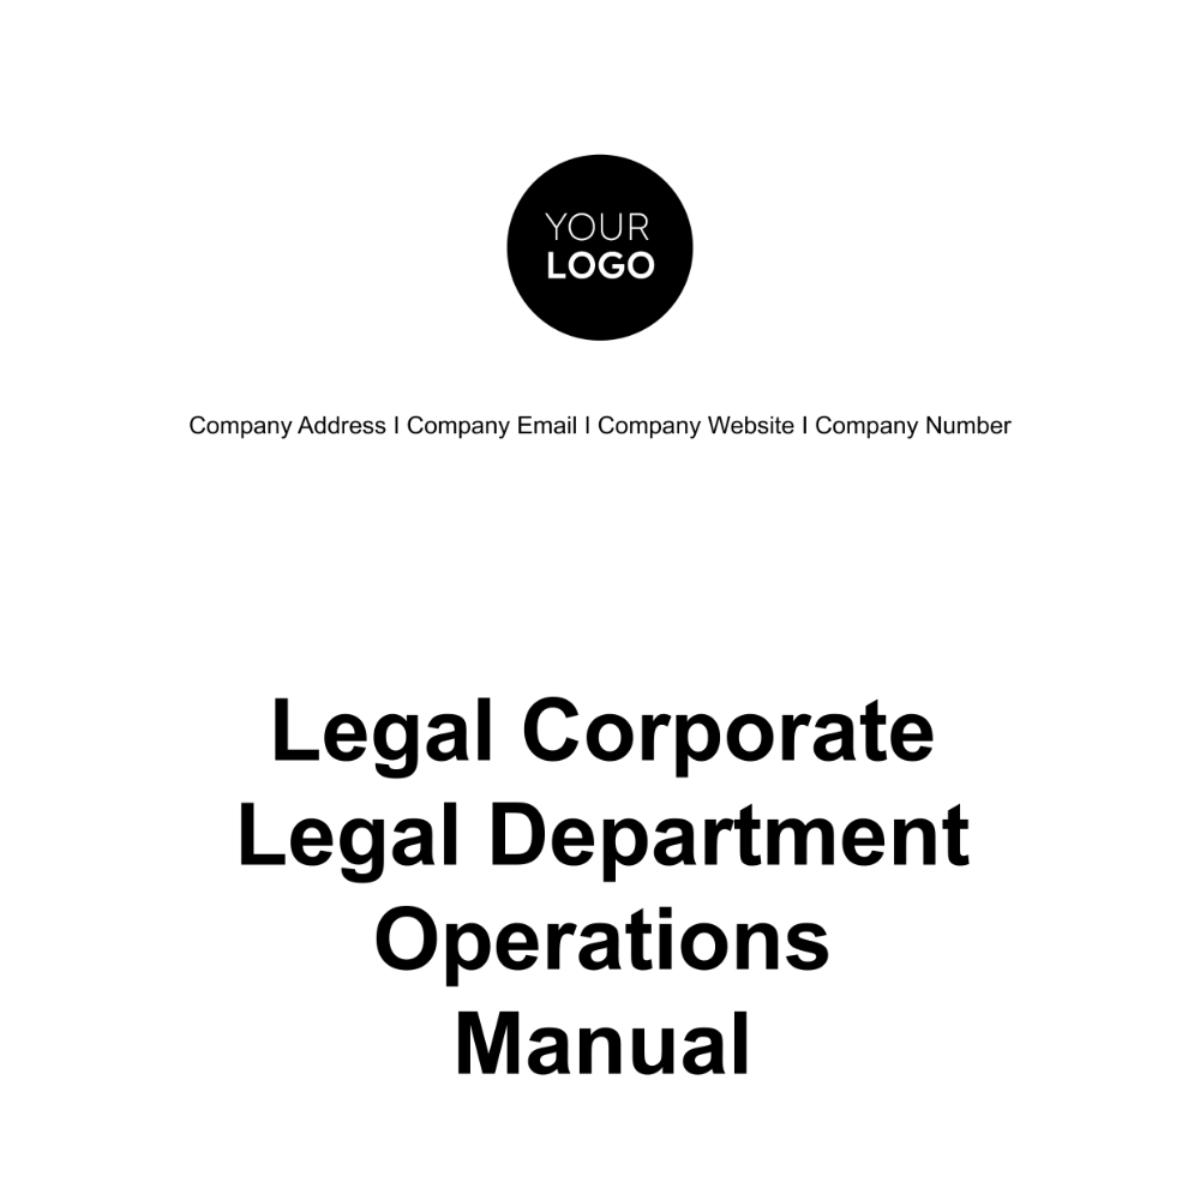 Legal Corporate Legal Department Operations Manual Template